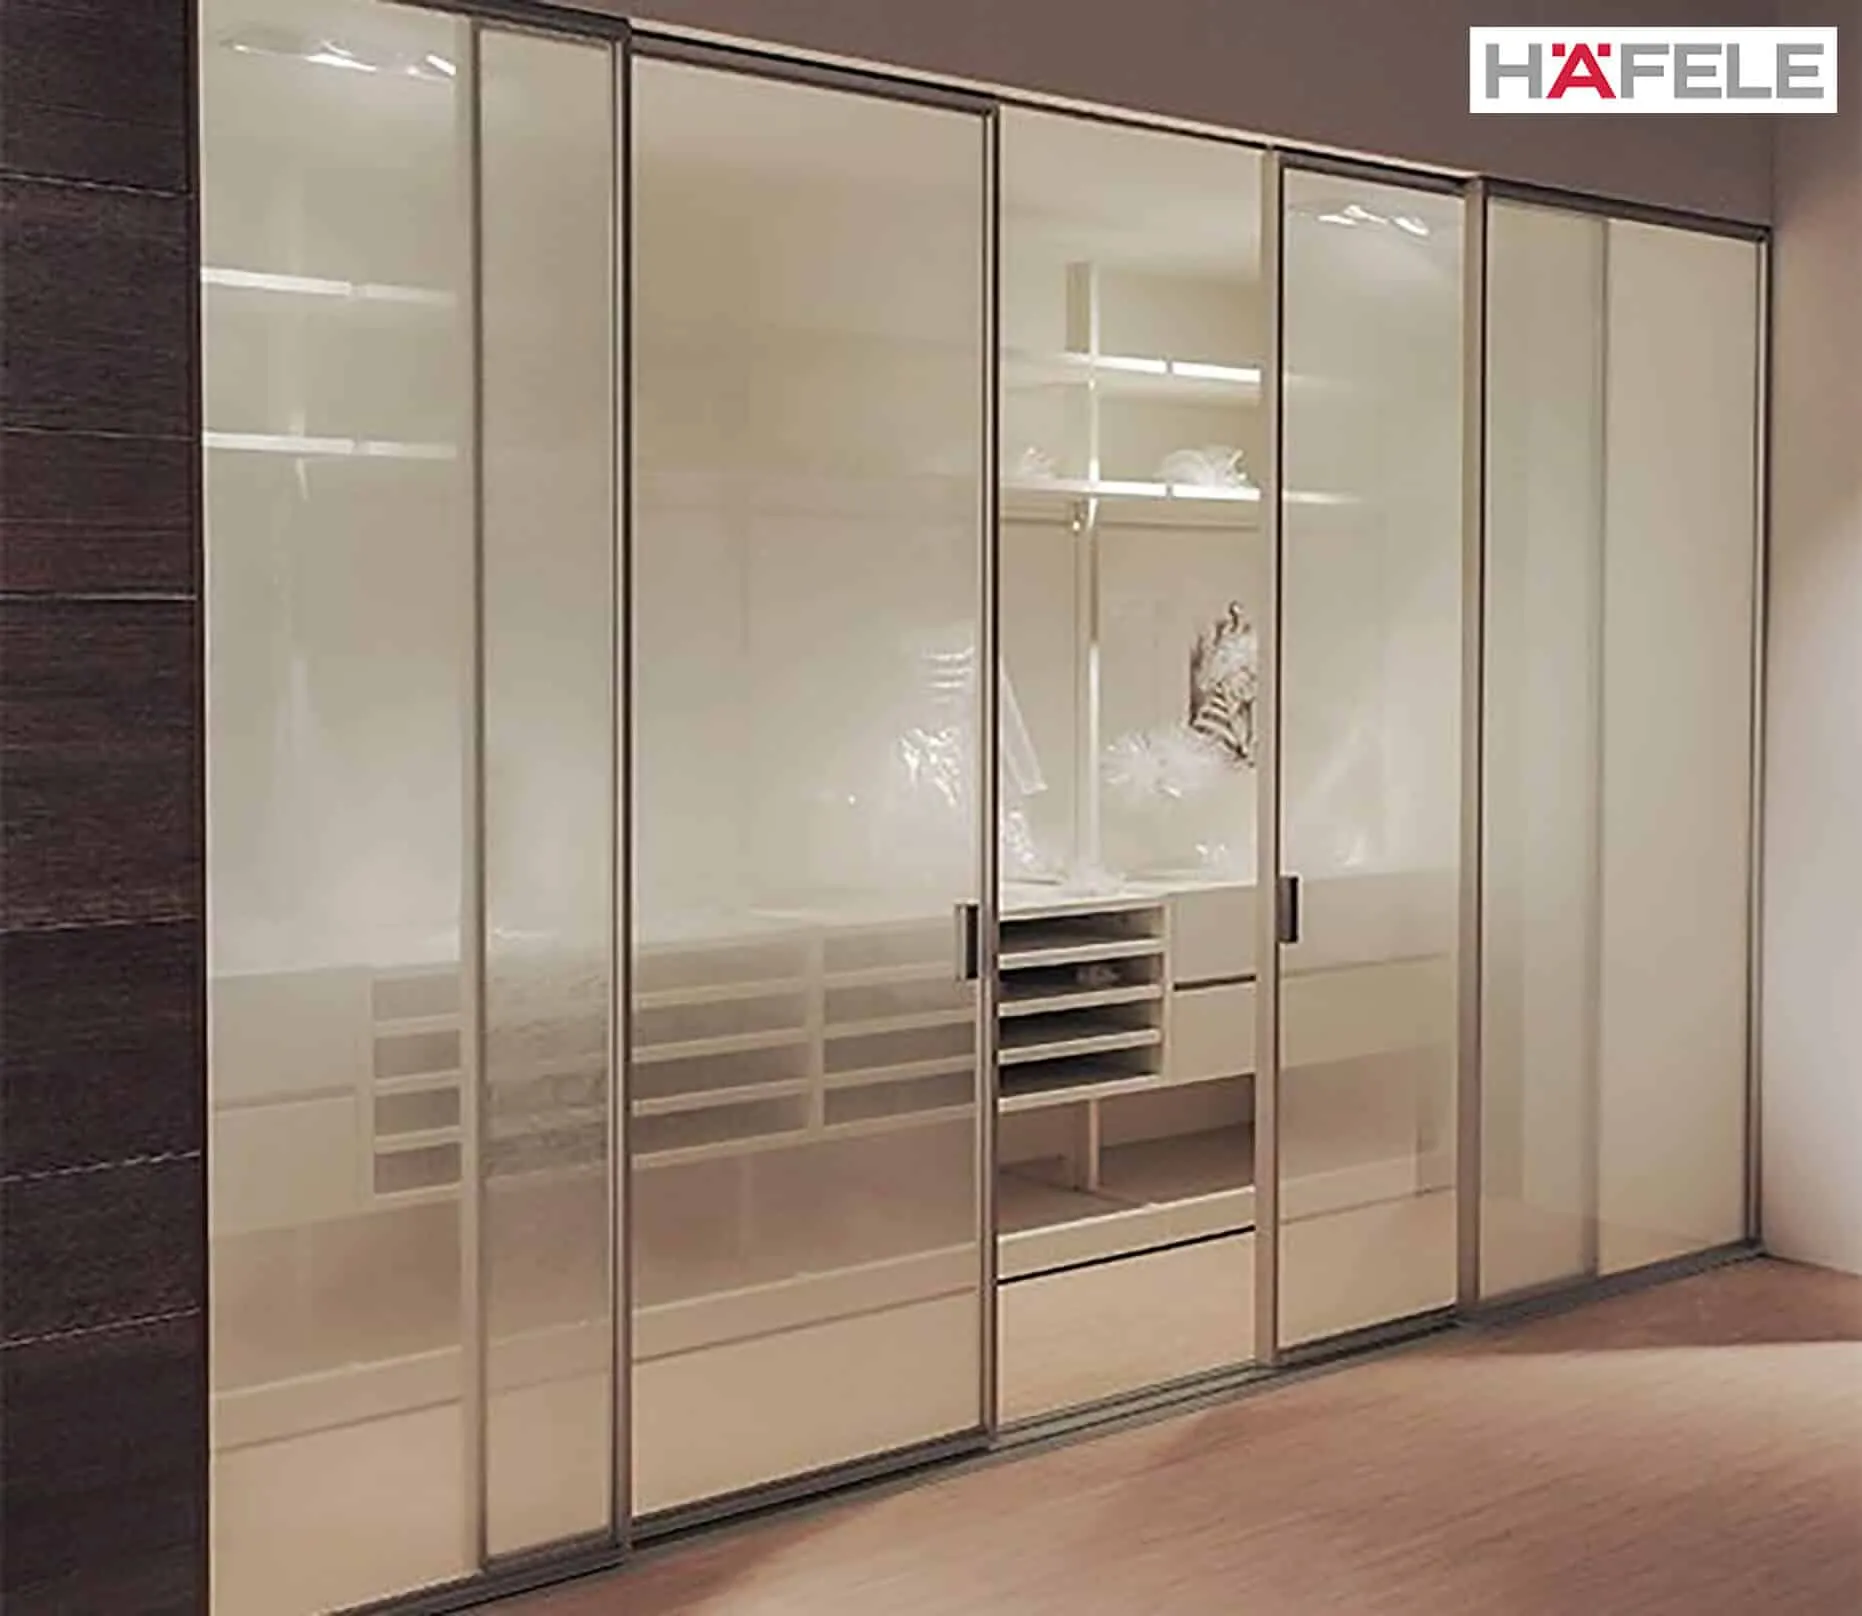 hafele Aluflex 80 B sliding door systems, floor to ceiling solutions, sliding wardrobe doors for walk-in wardrobes